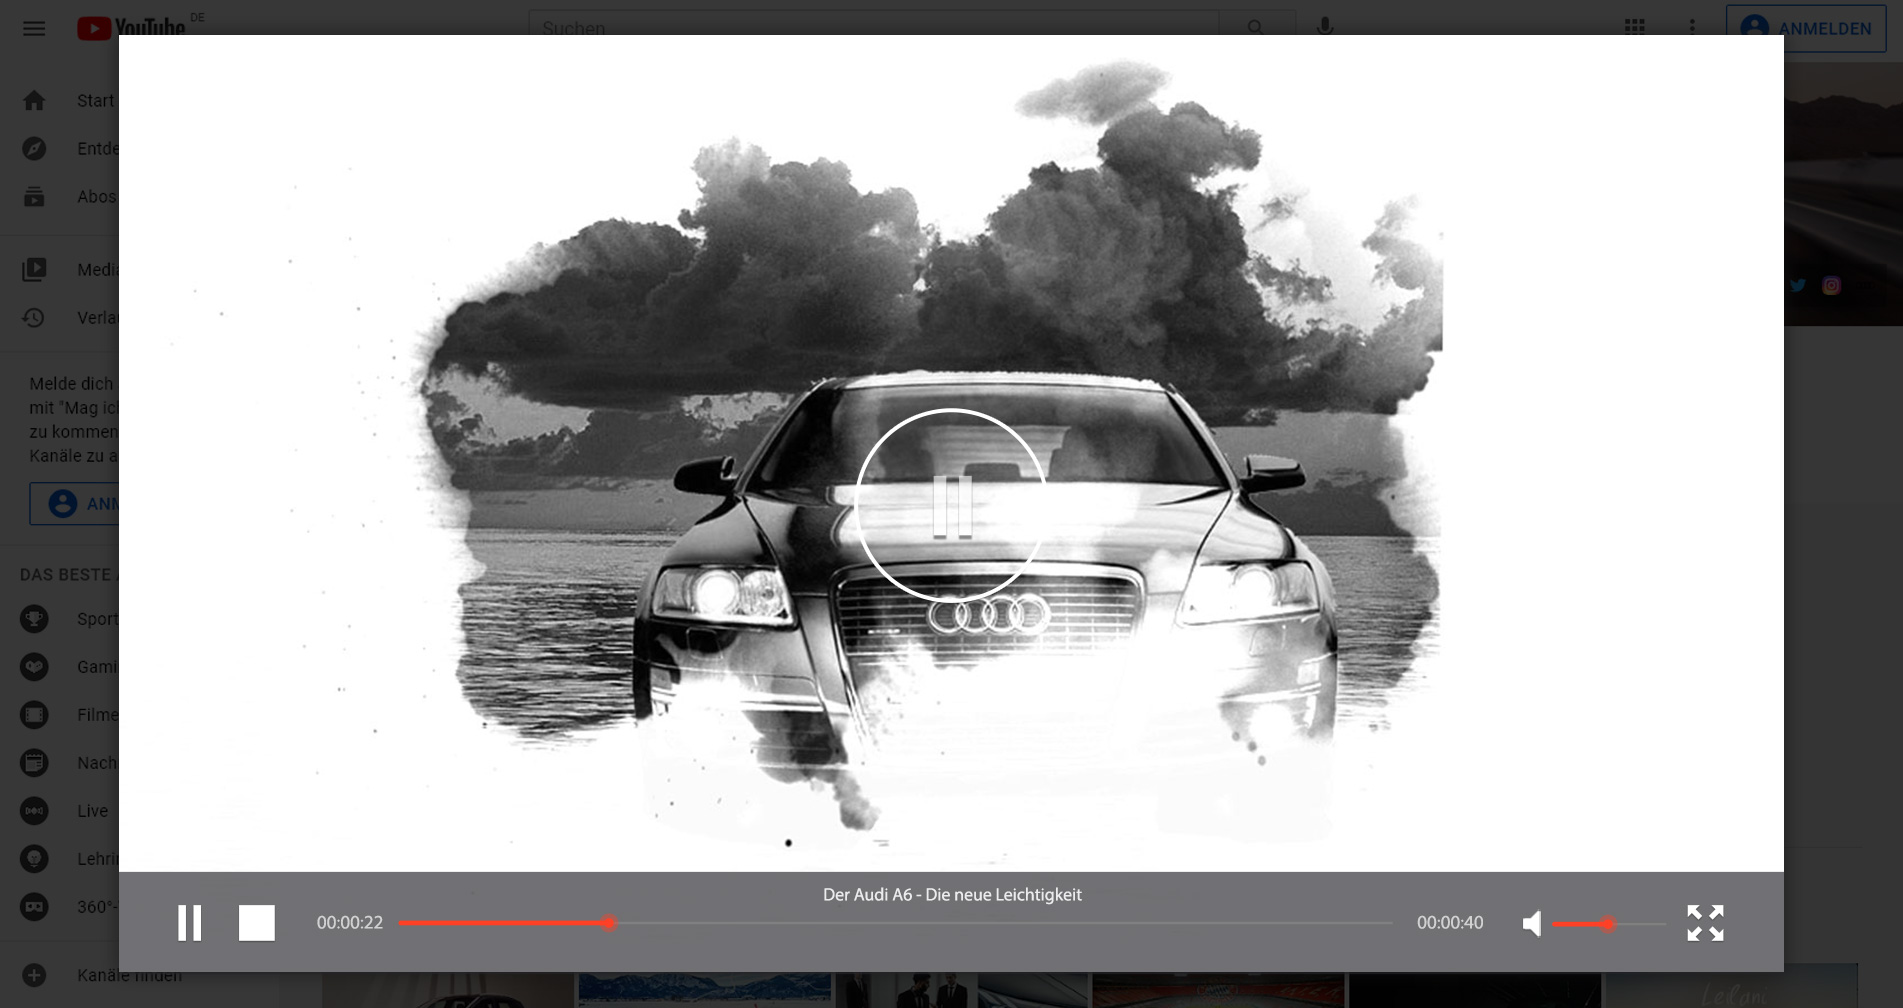 Audi A6 commercial